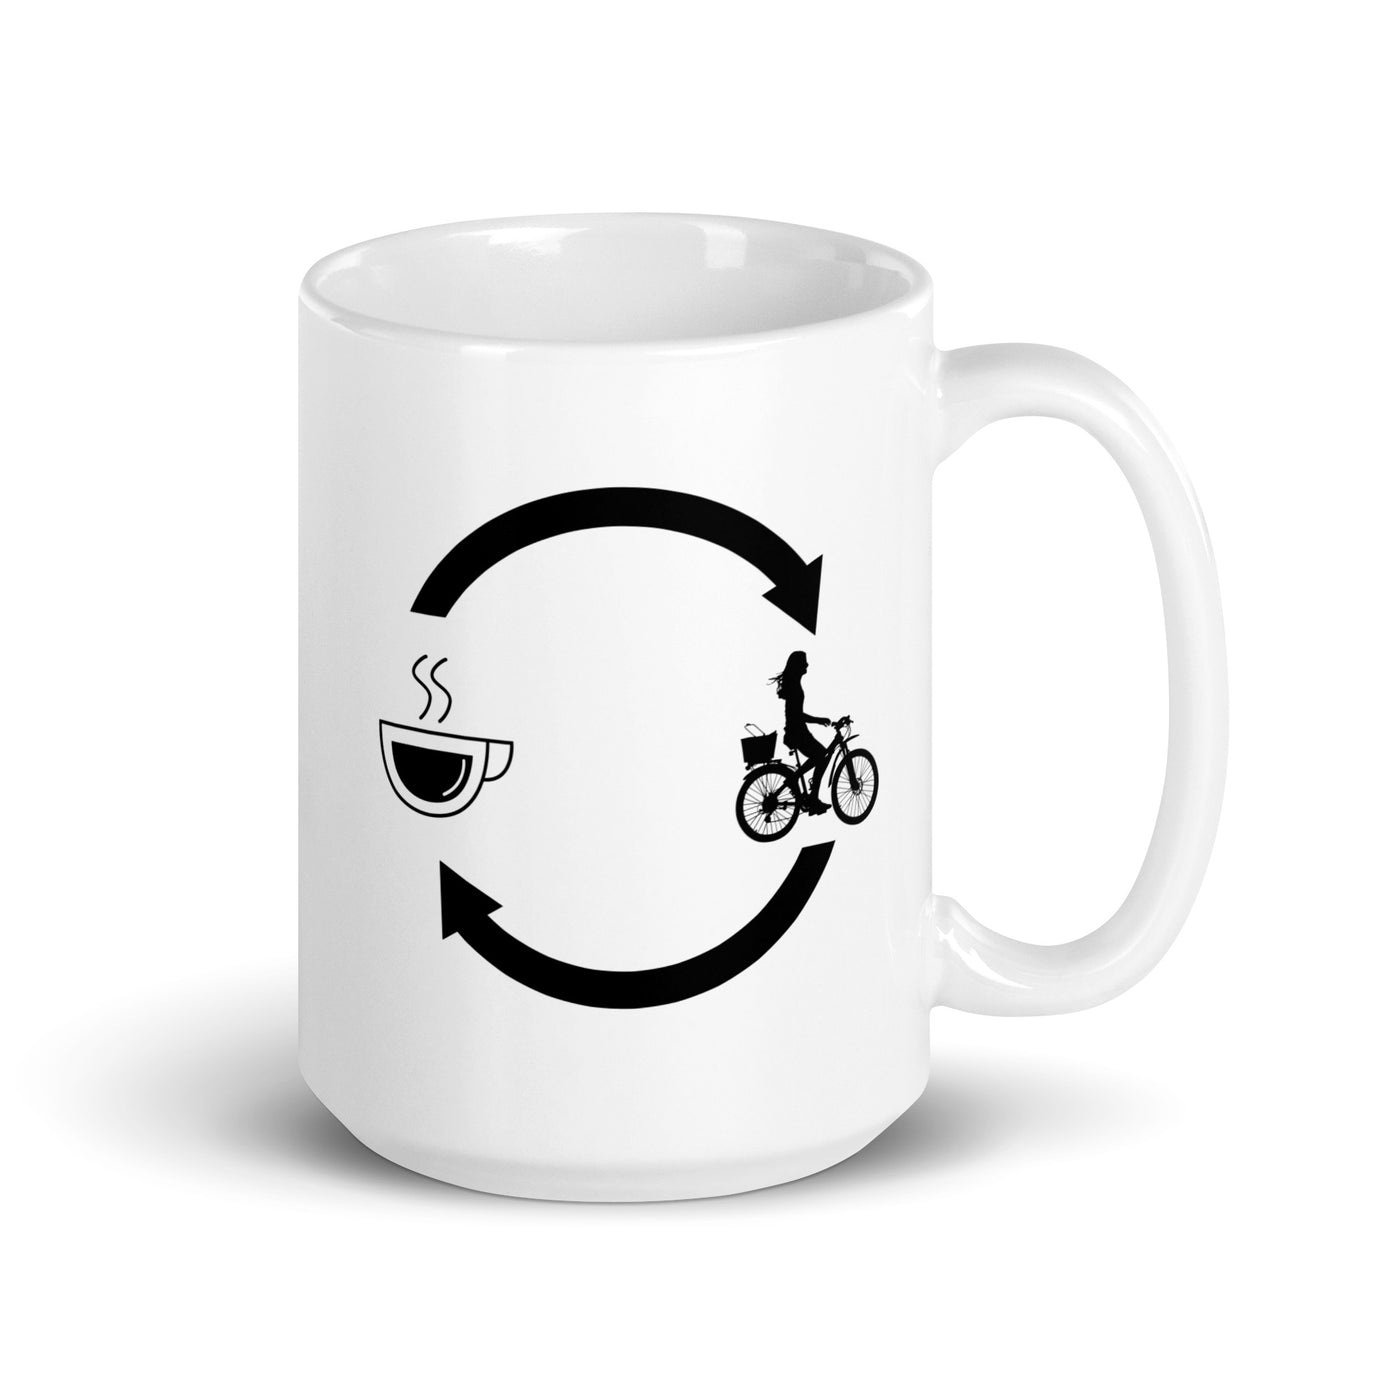 Coffee Loading Arrows And Cycling 2 - Tasse fahrrad 15oz